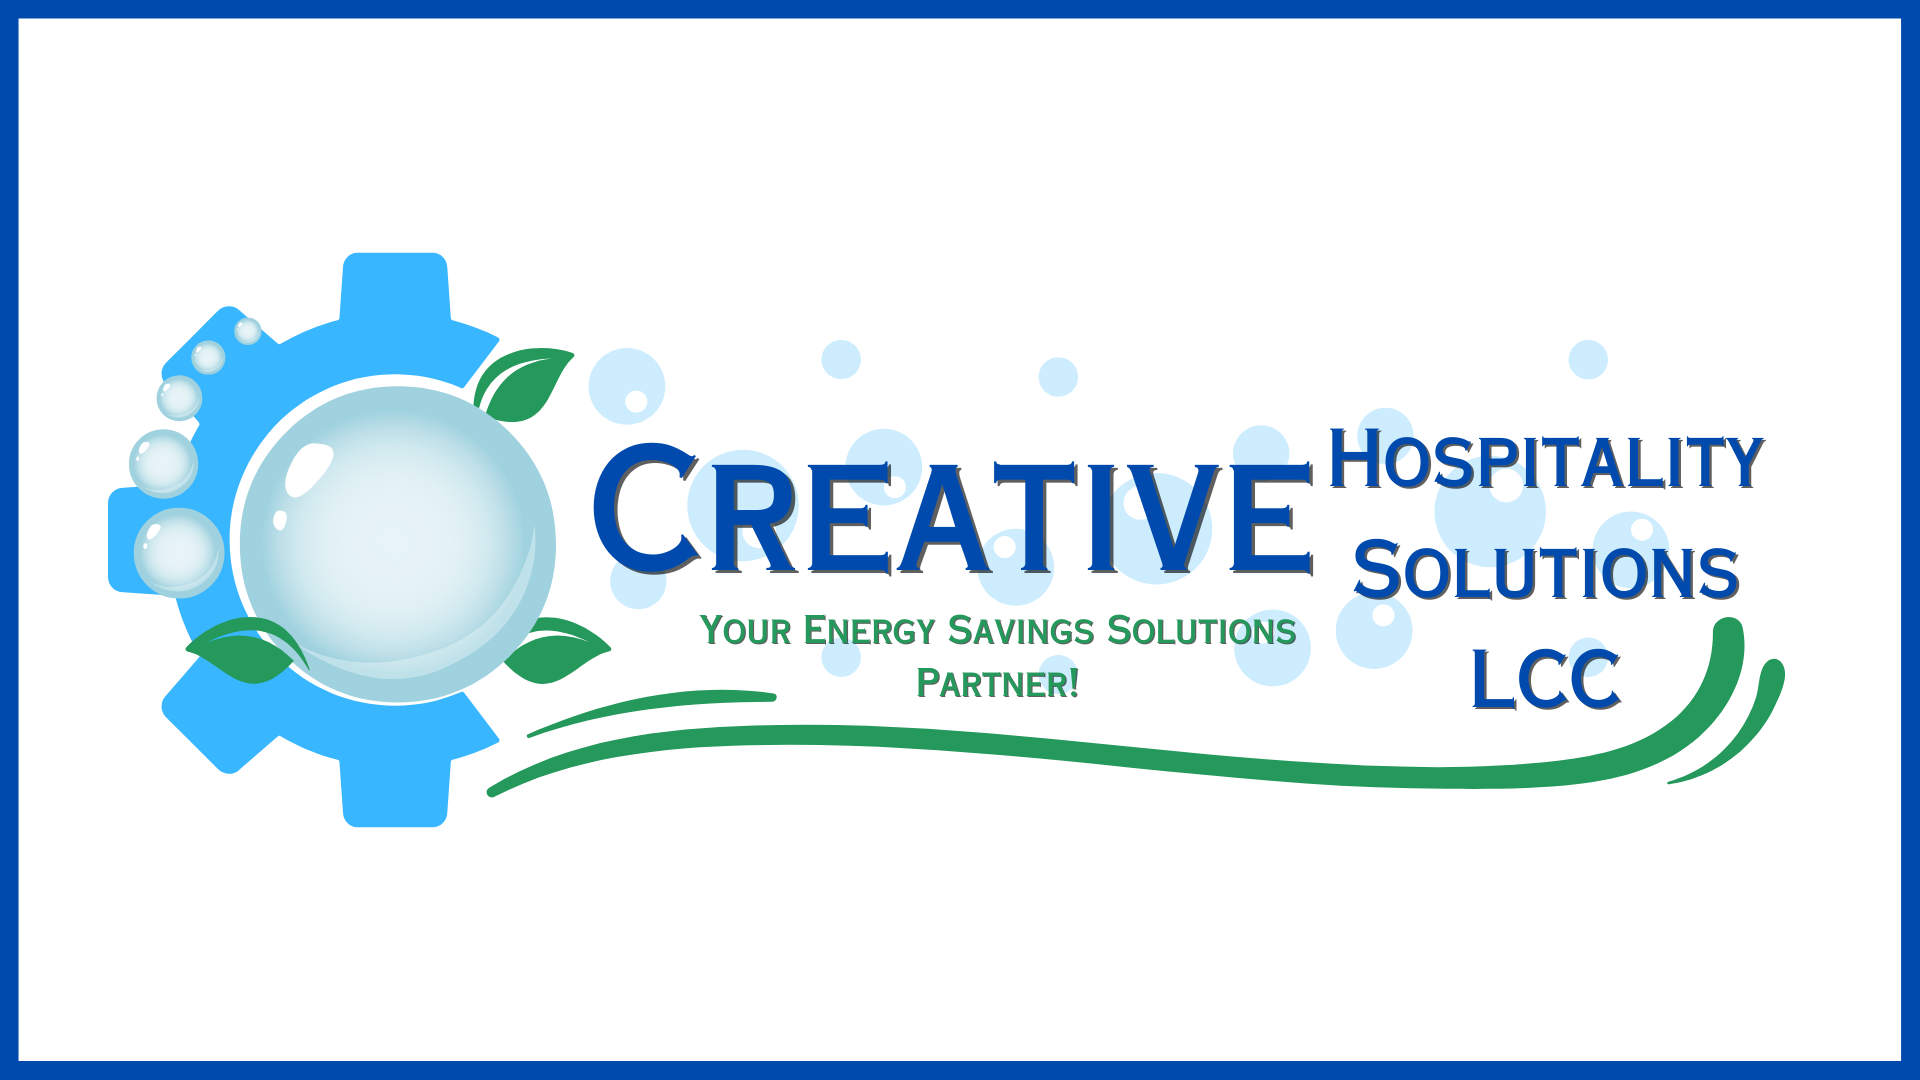 Creative Hopitality Solutions LCC